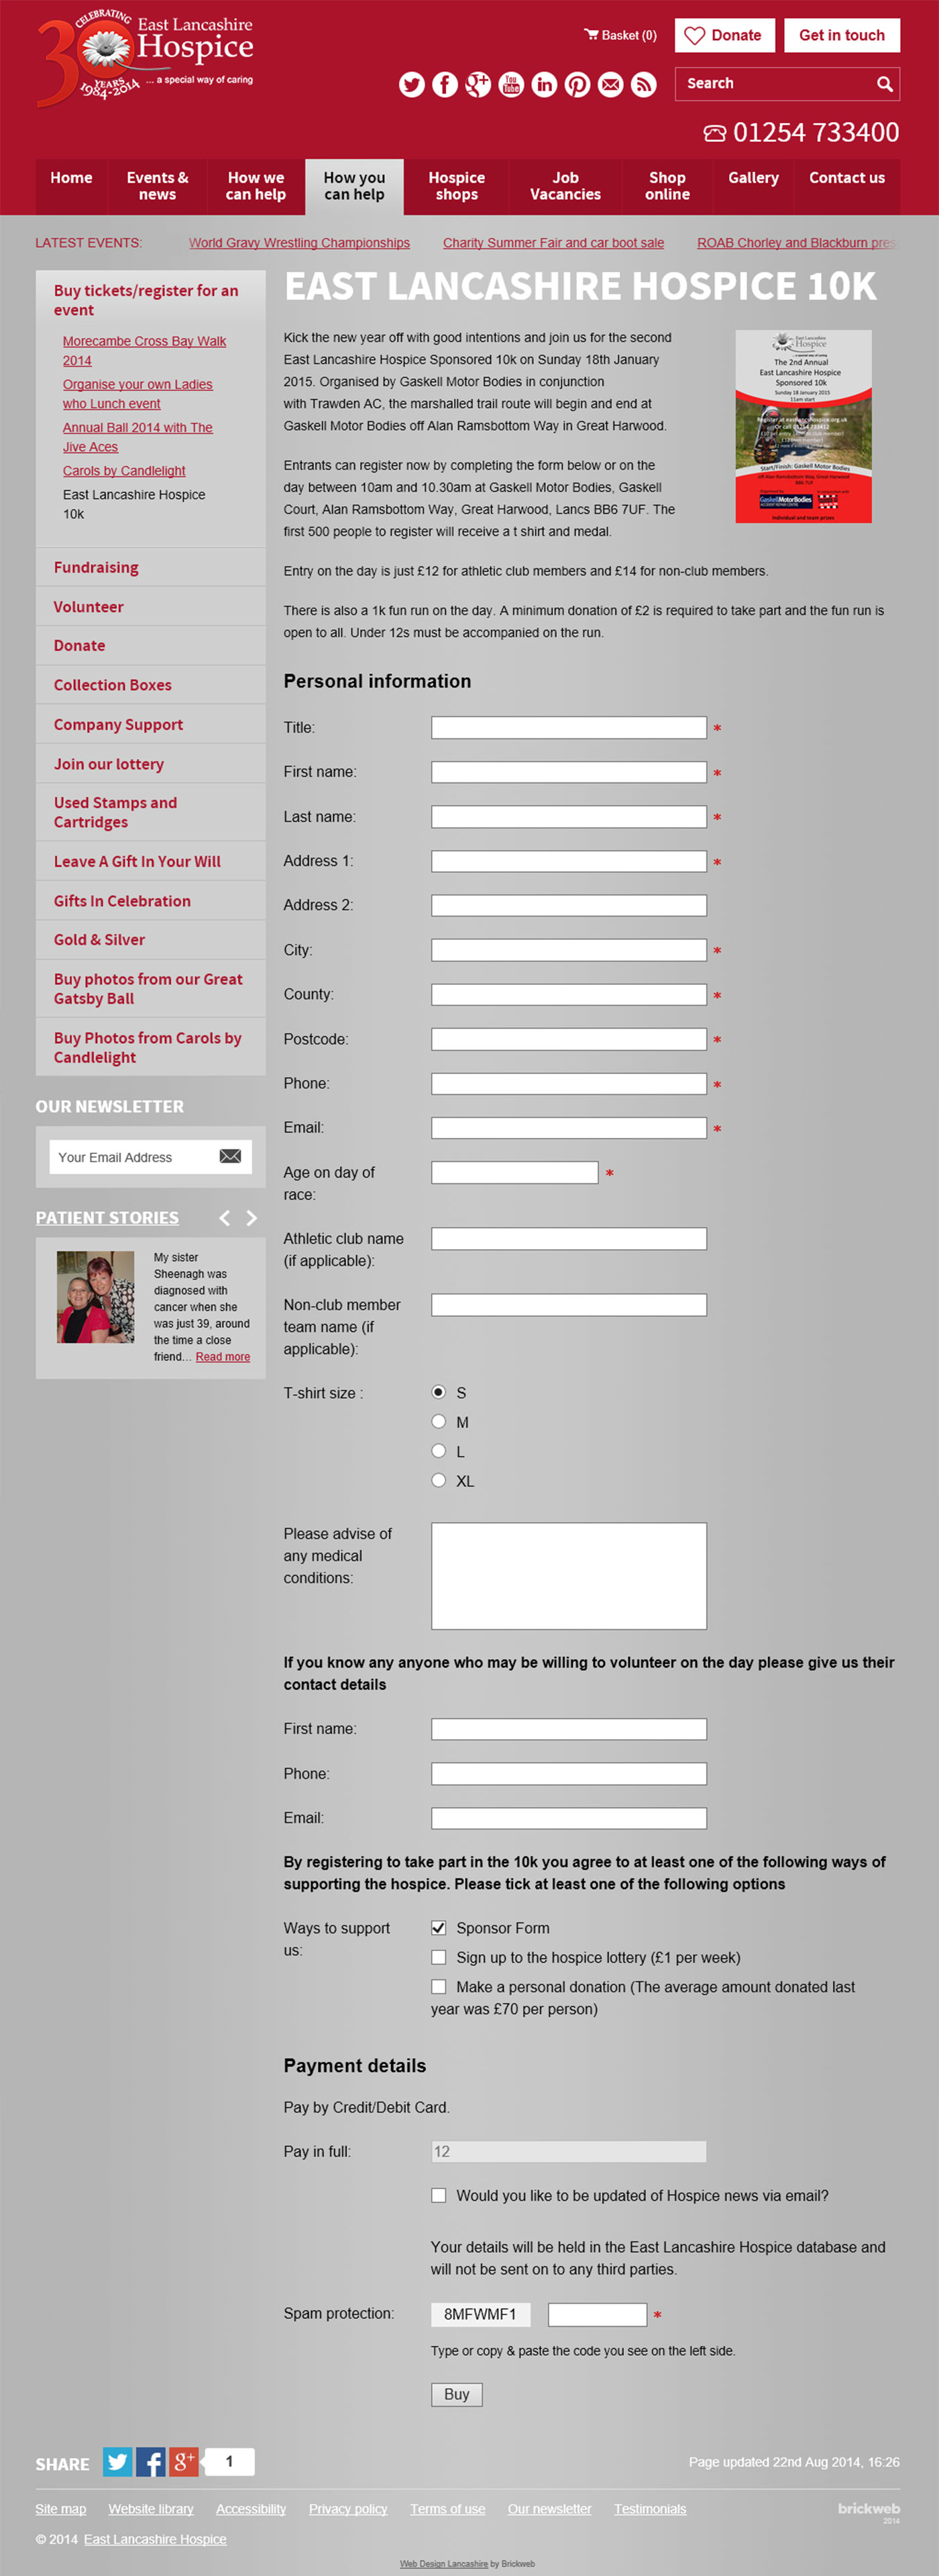 East Lancashire Hospice (2014) Enquiry form